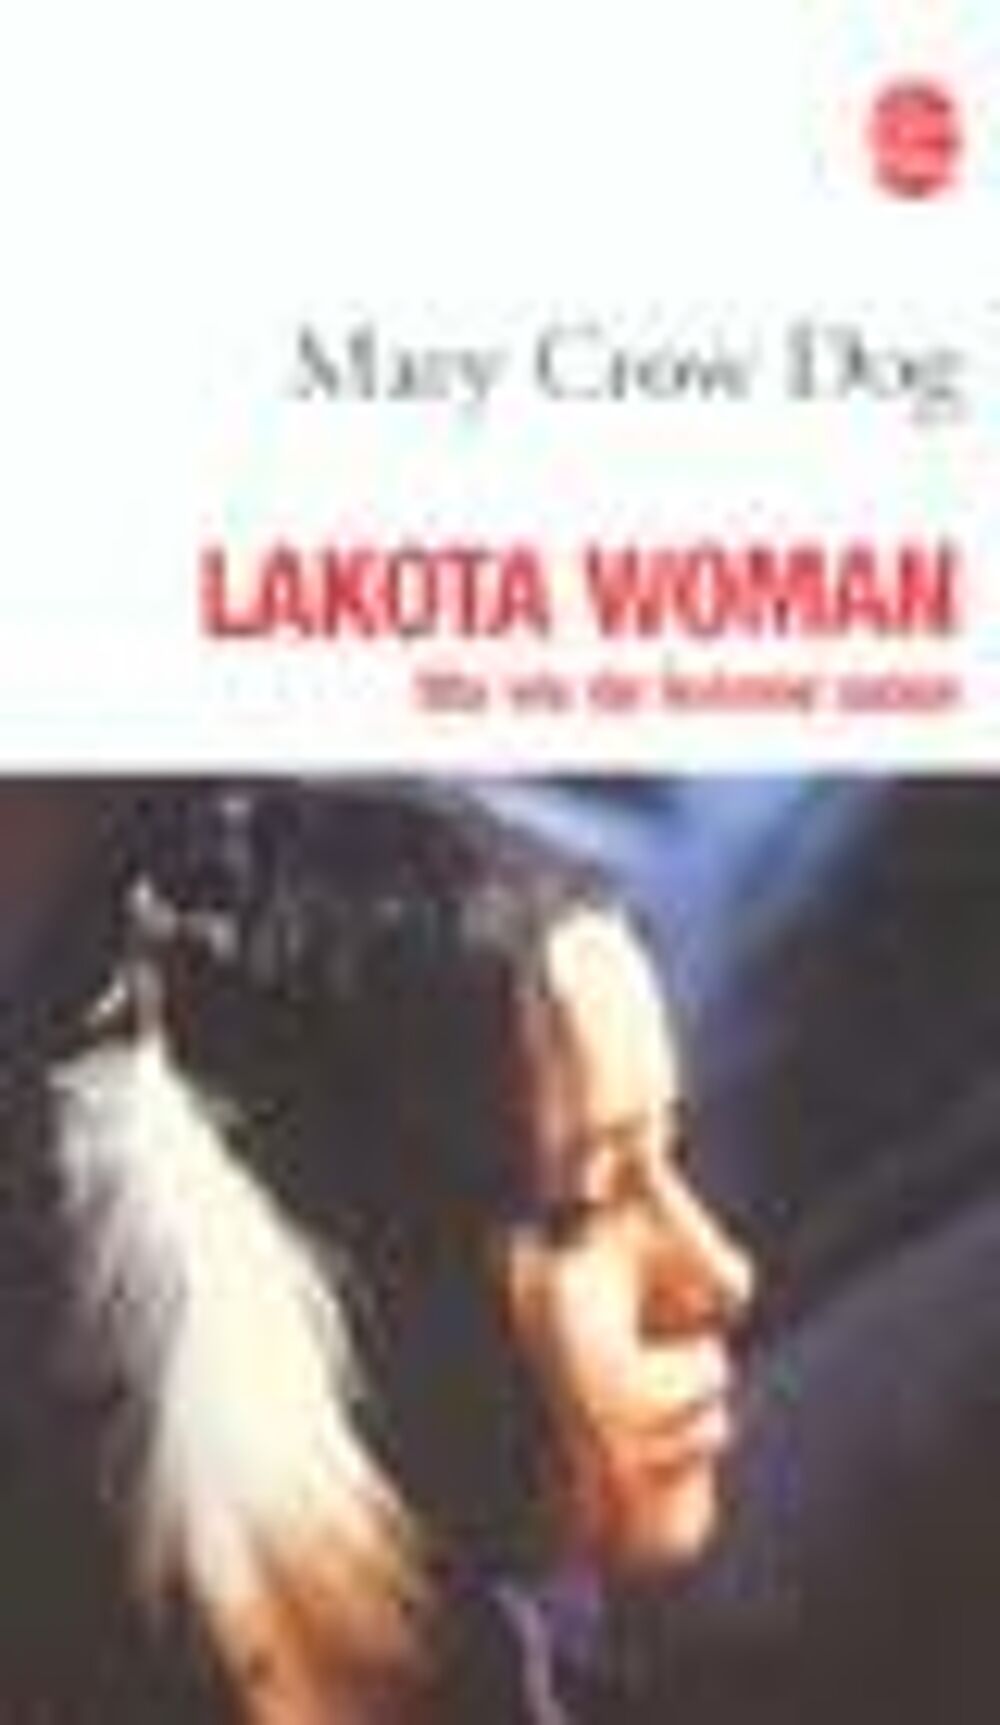 Lakota woman Livres et BD